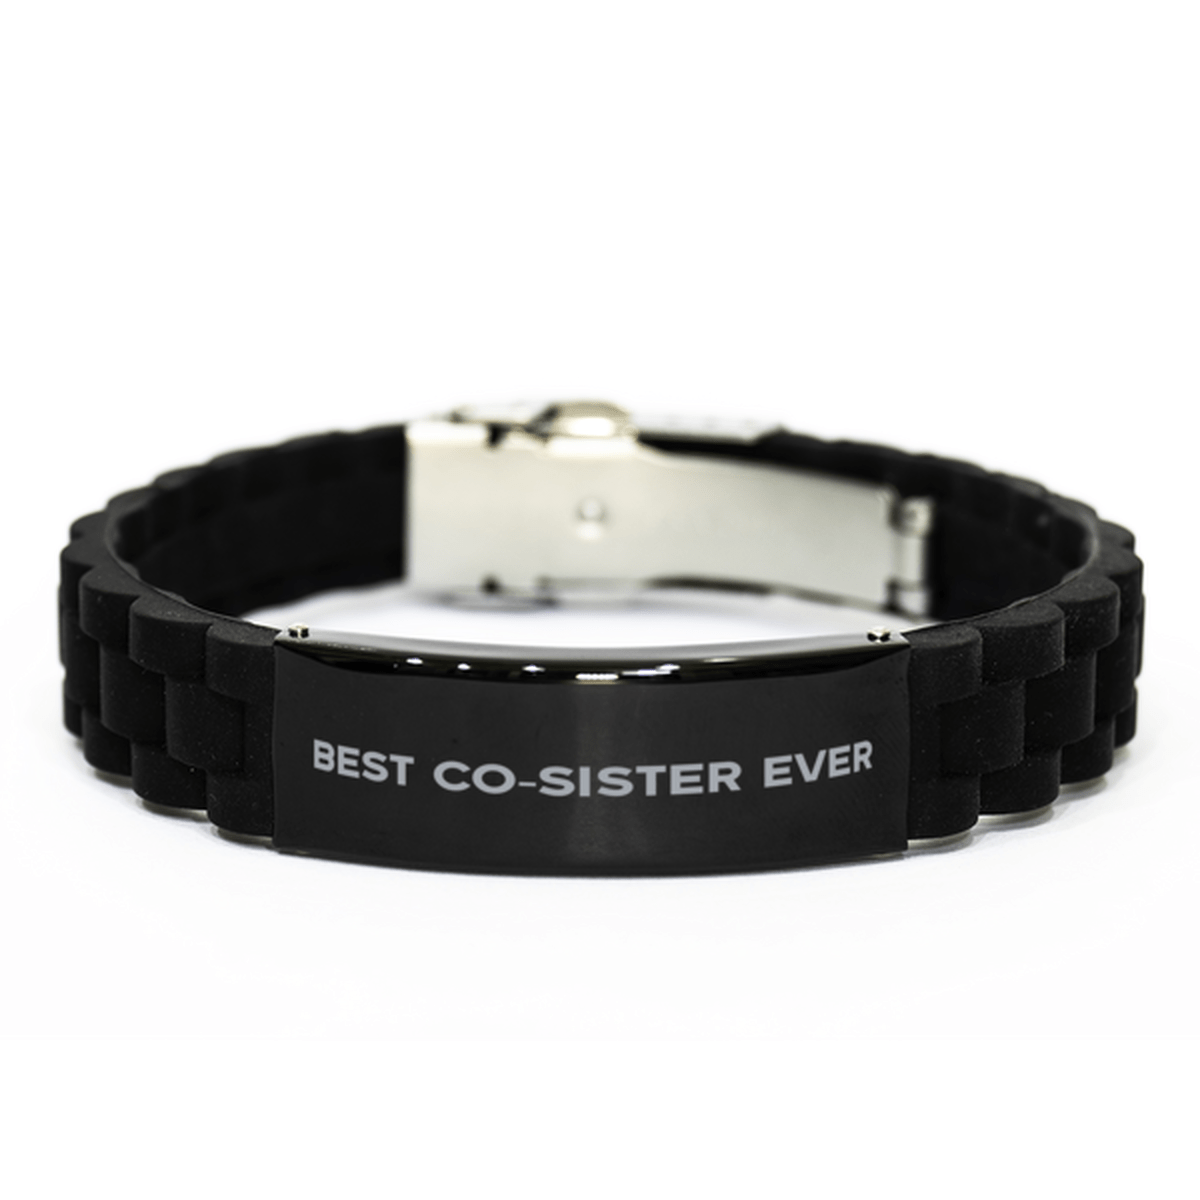 Unique Co-Sister Bracelet, Best Co-Sister Ever, Gift for Co-Sister